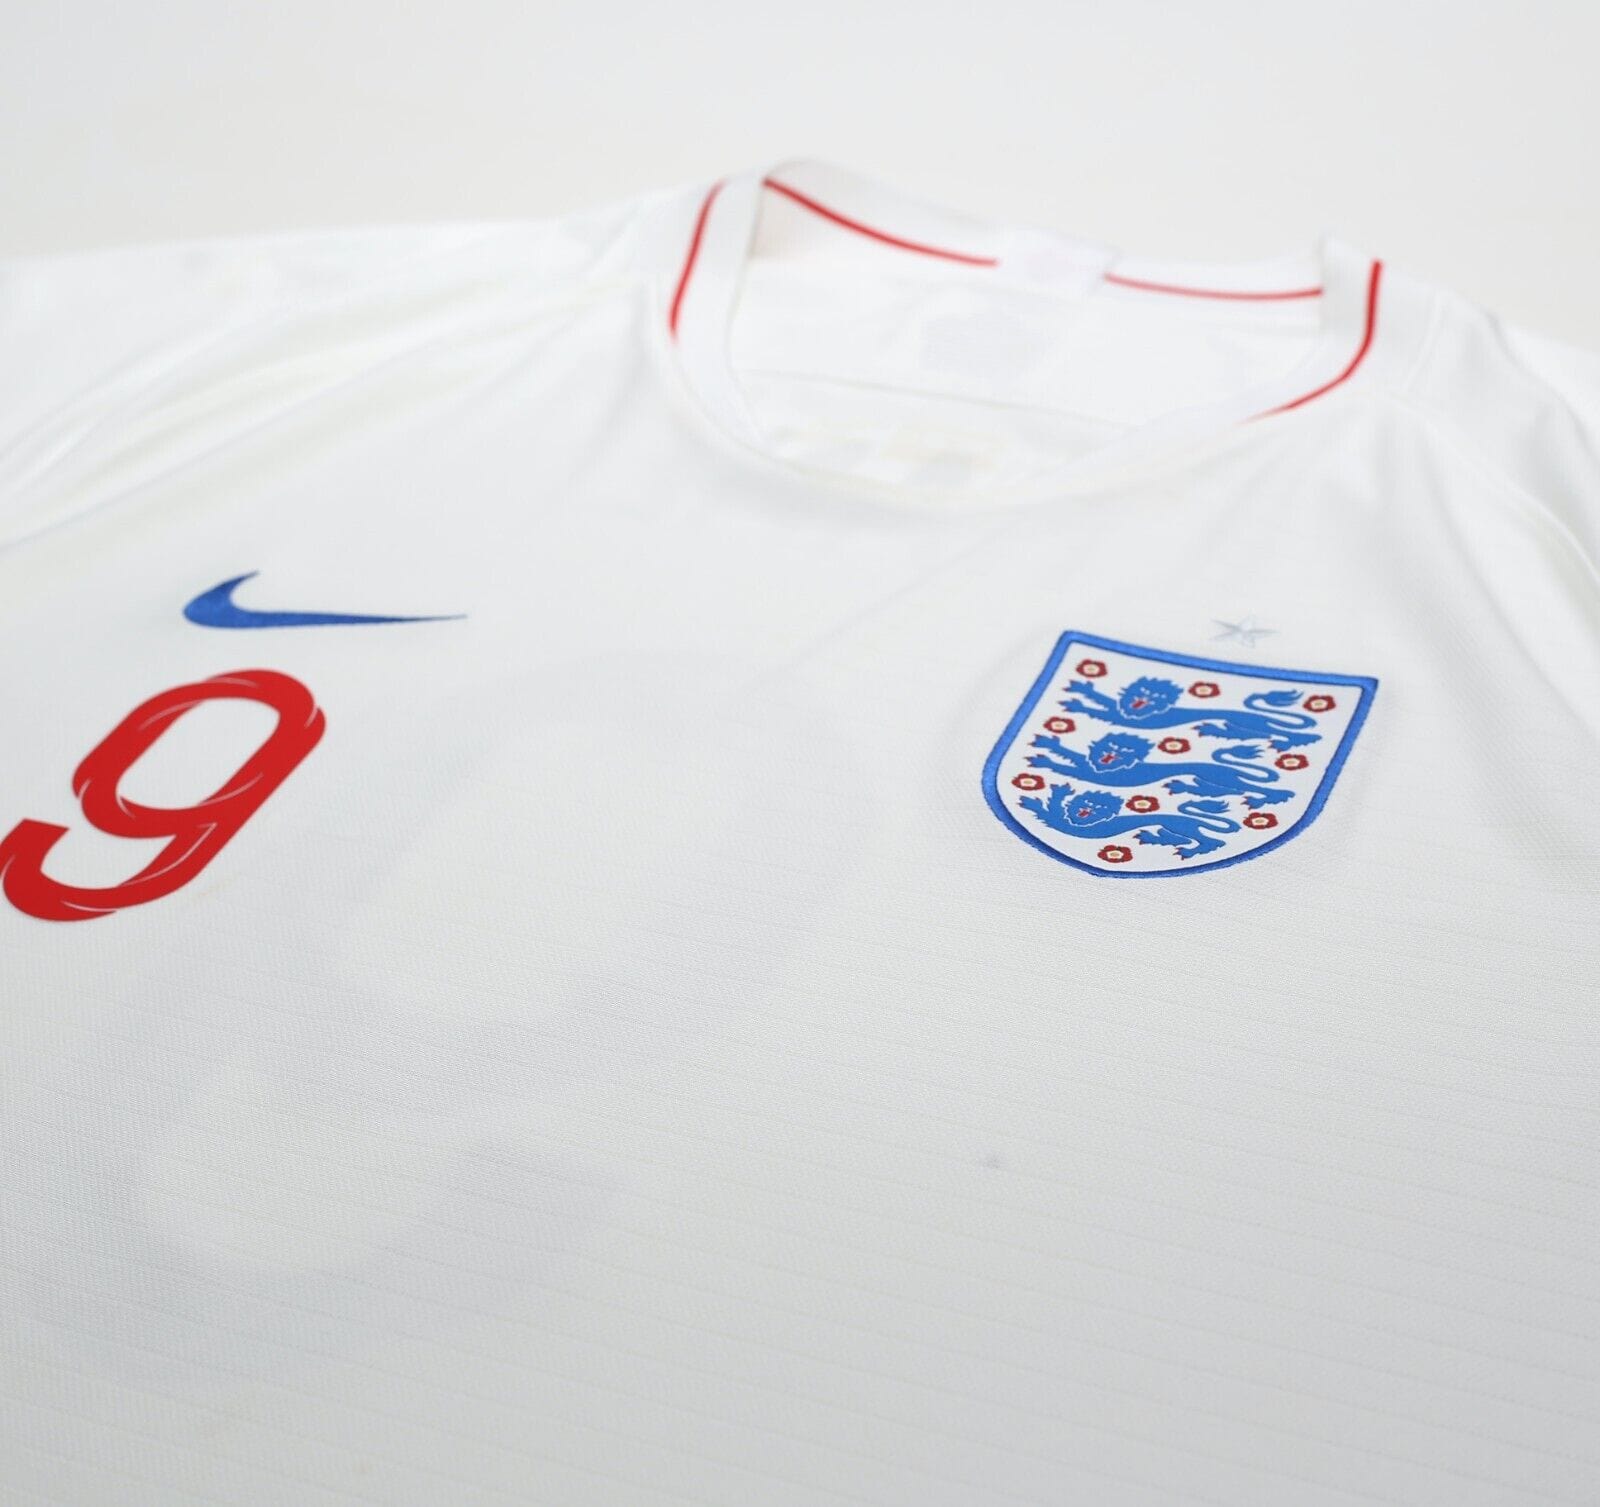 2018/19 KANE #9 England Nike Home Football Shirt (XL) WC 2018